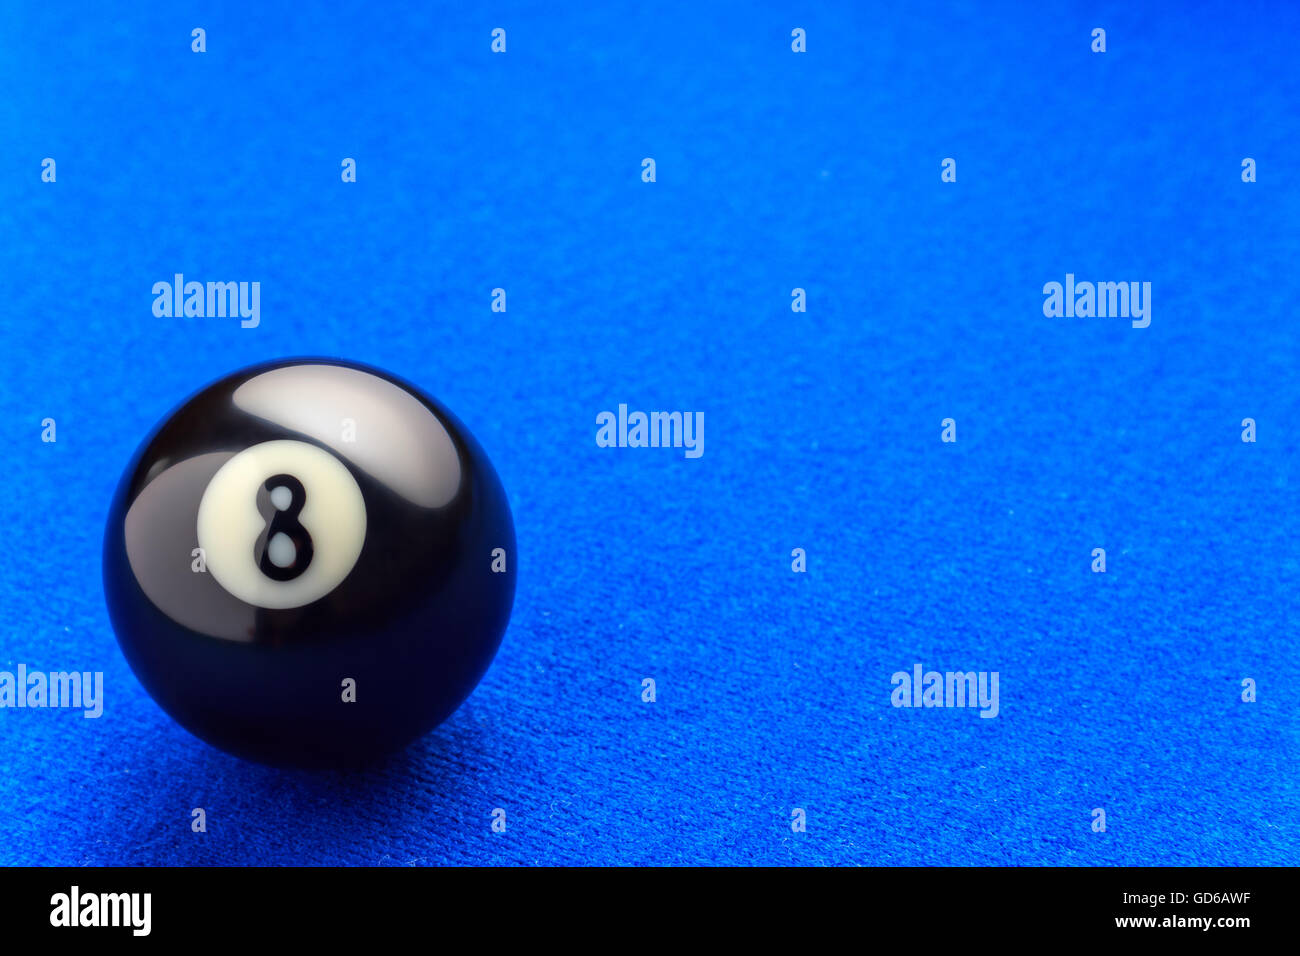 Eight billiard ball in a blue pool table. Stock Photo